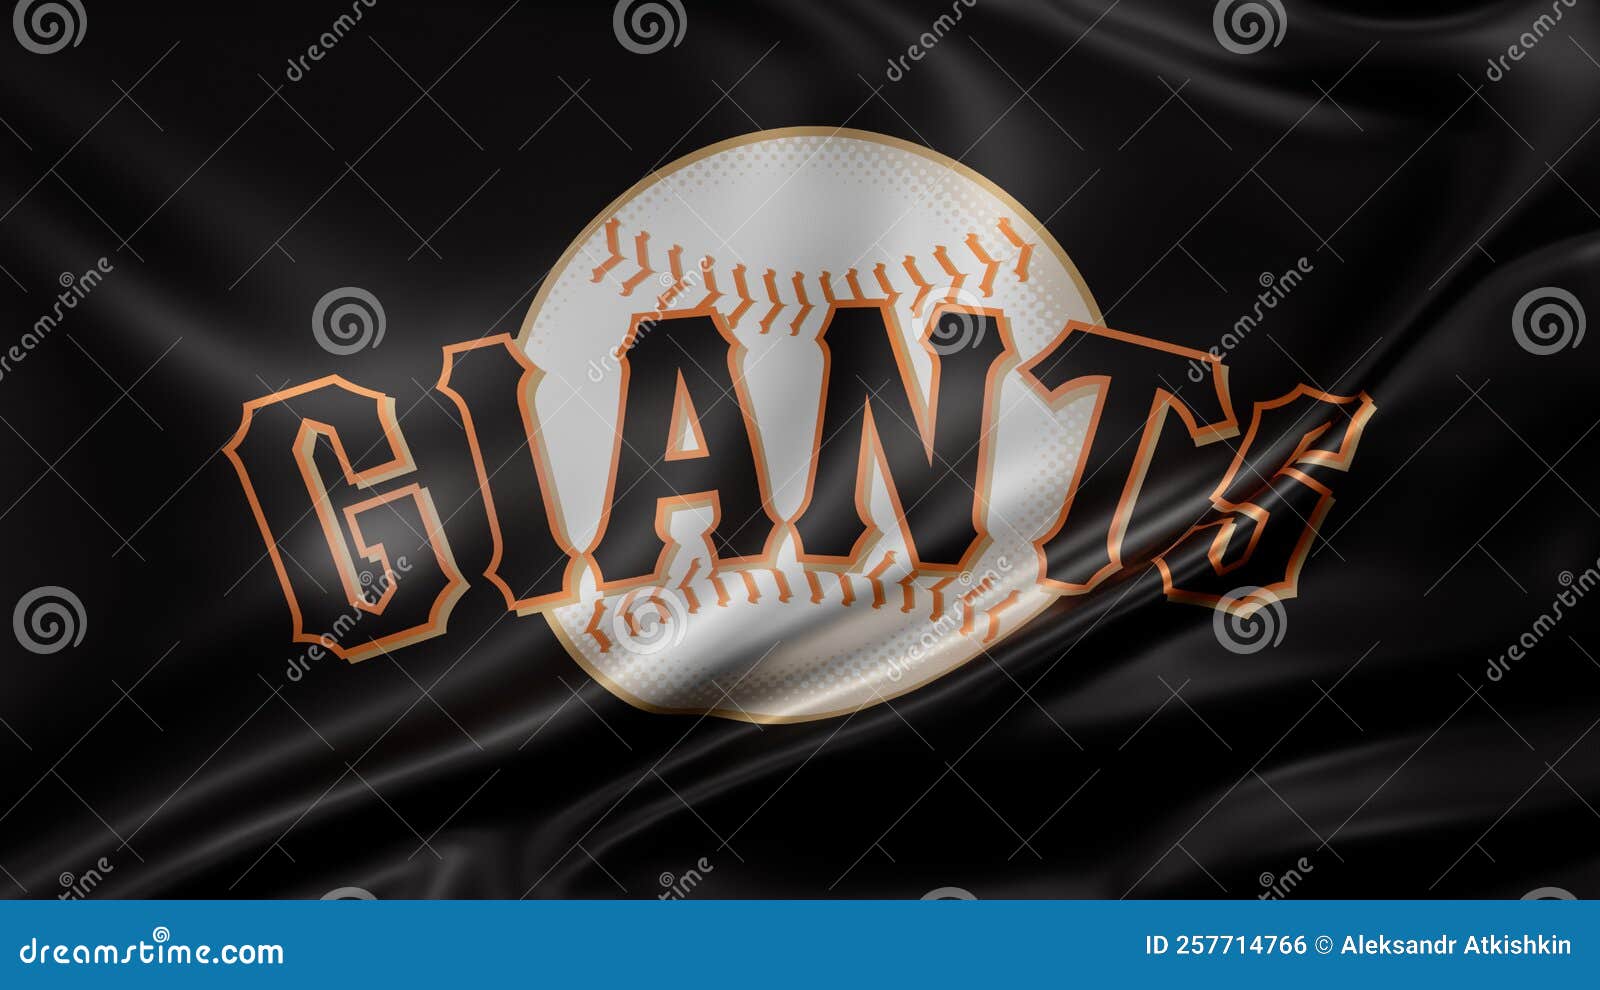 wallpaper giants baseball